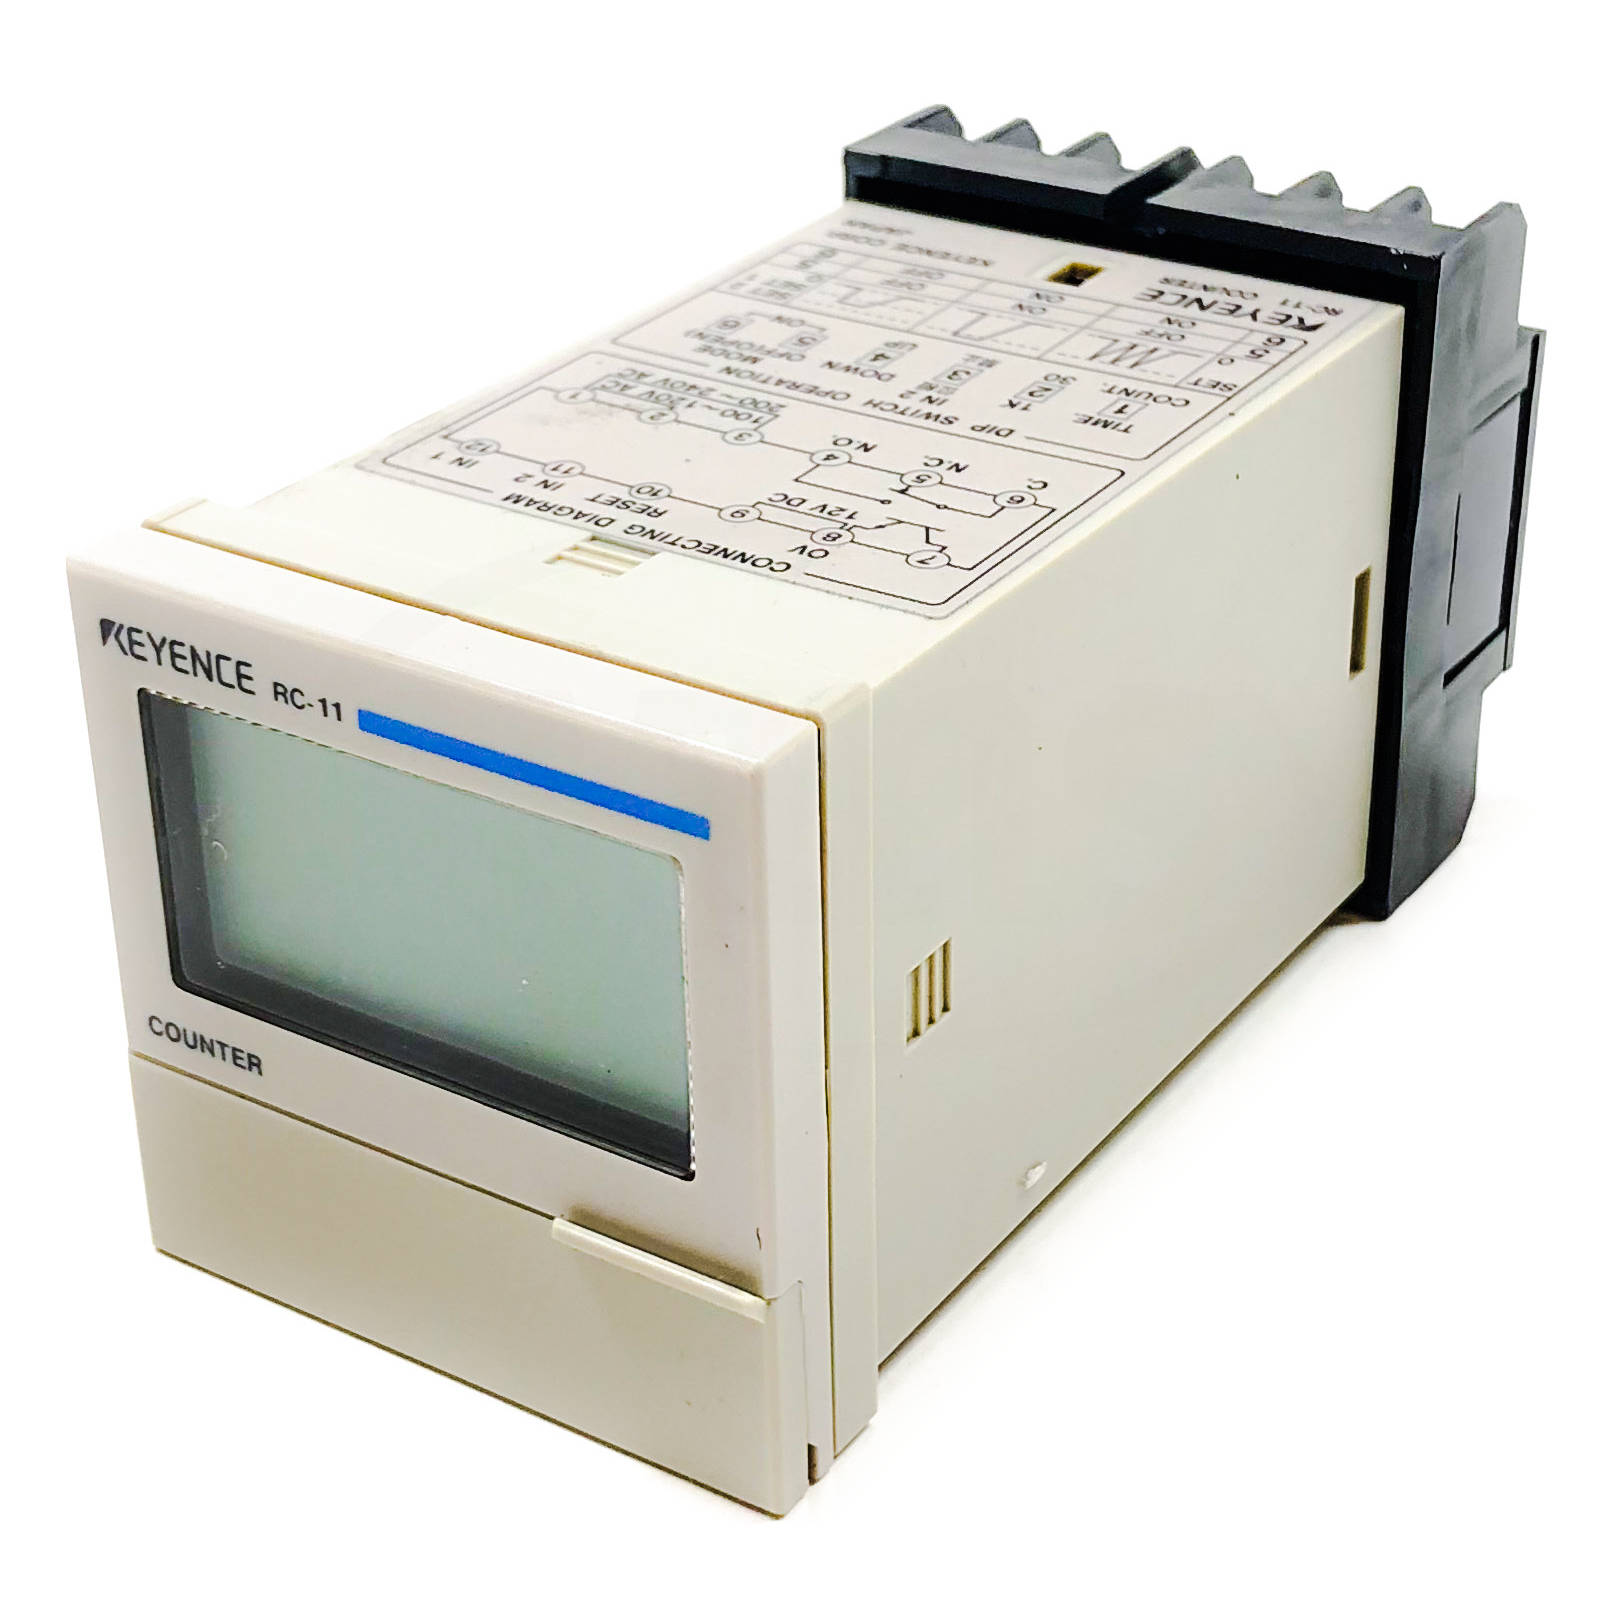 RC-11 Keyence LCD Electronic Counter 6